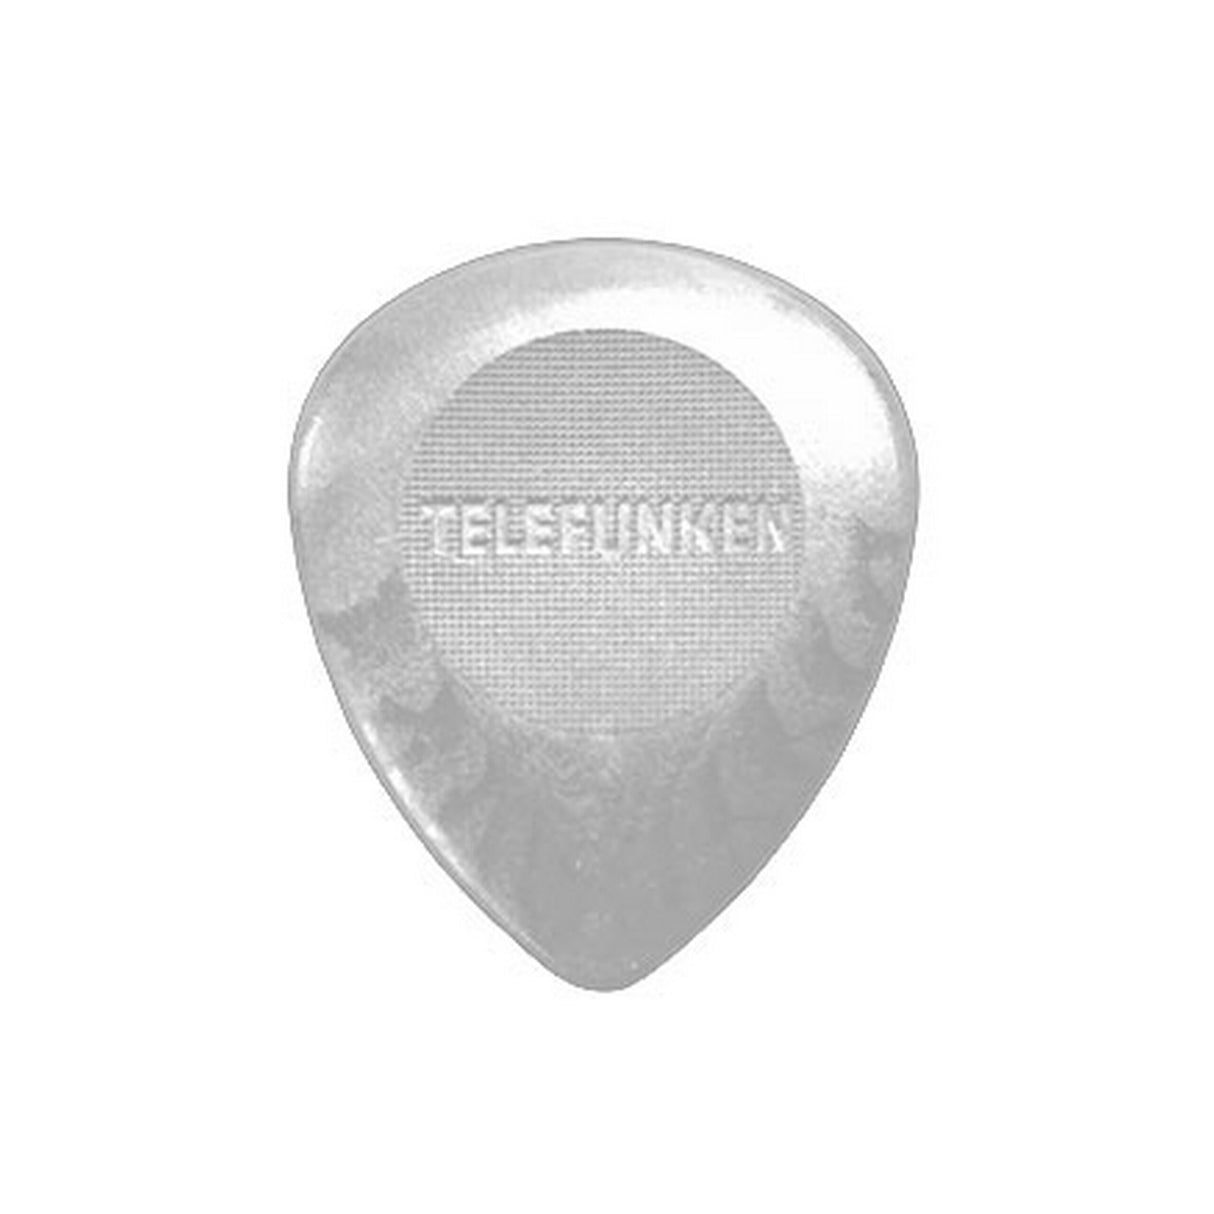 Telefunken 3mm Bass Circle Delrin Guitar Picks, White, 6-Pack